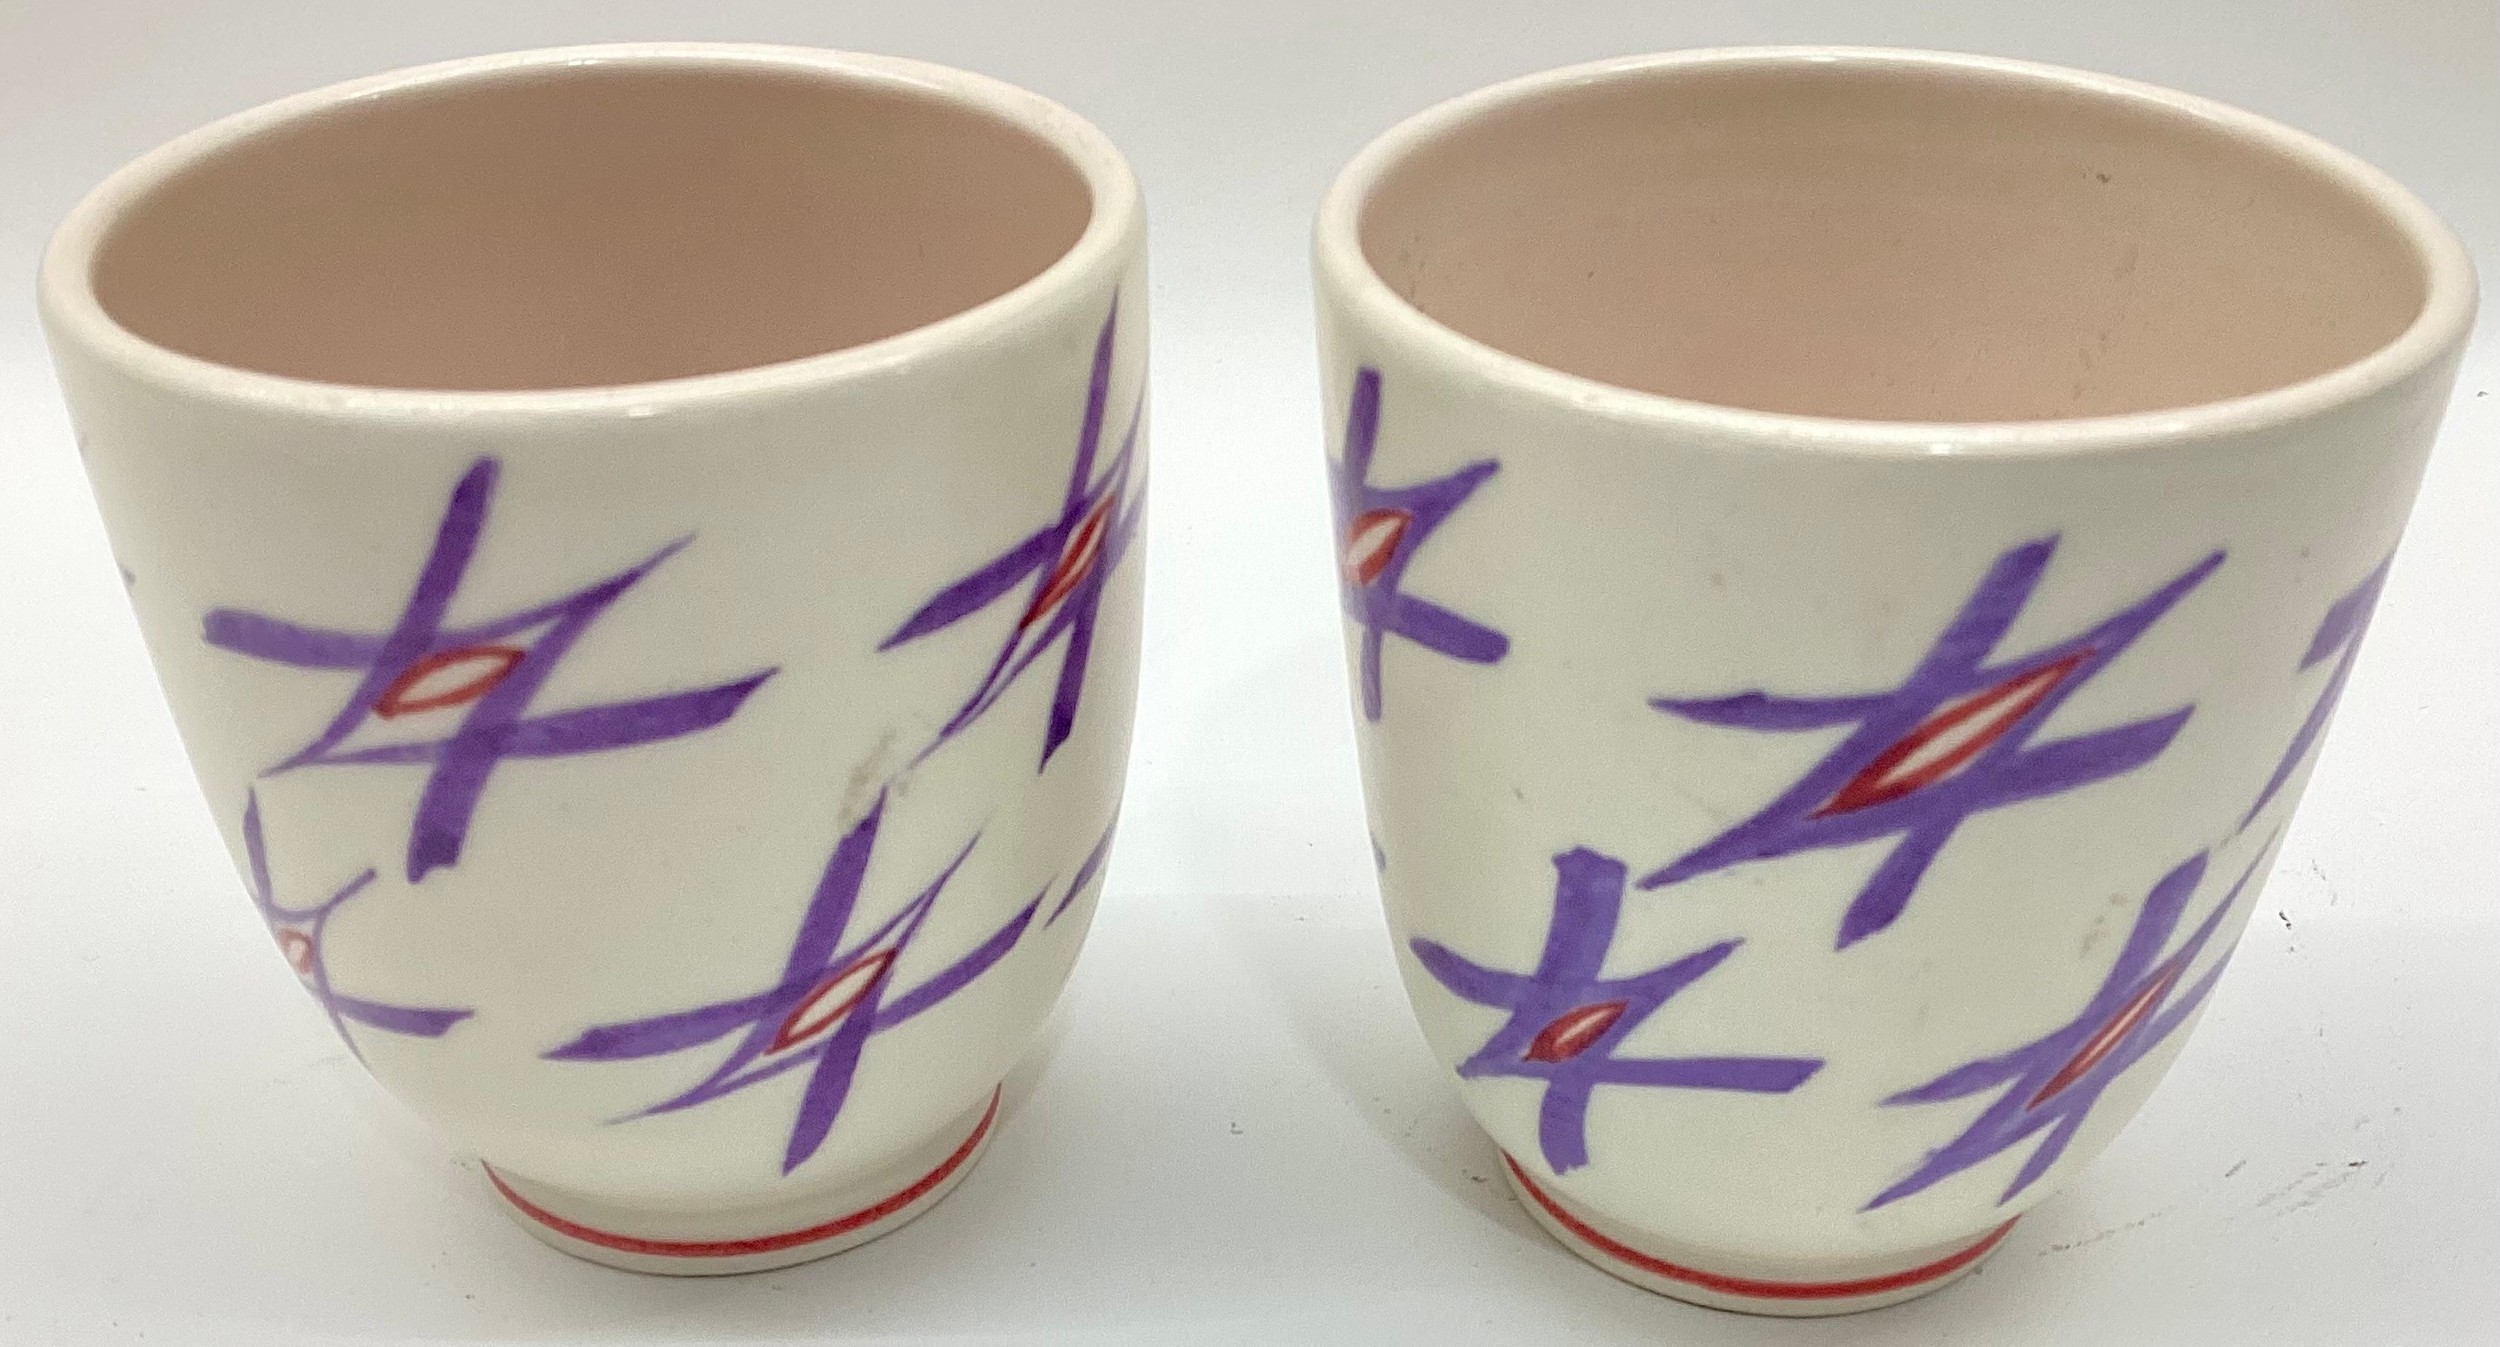 Poole Pottery pair of shape 650 FSU pattern freeform miniature planters 2.75" high (2) - Image 2 of 4